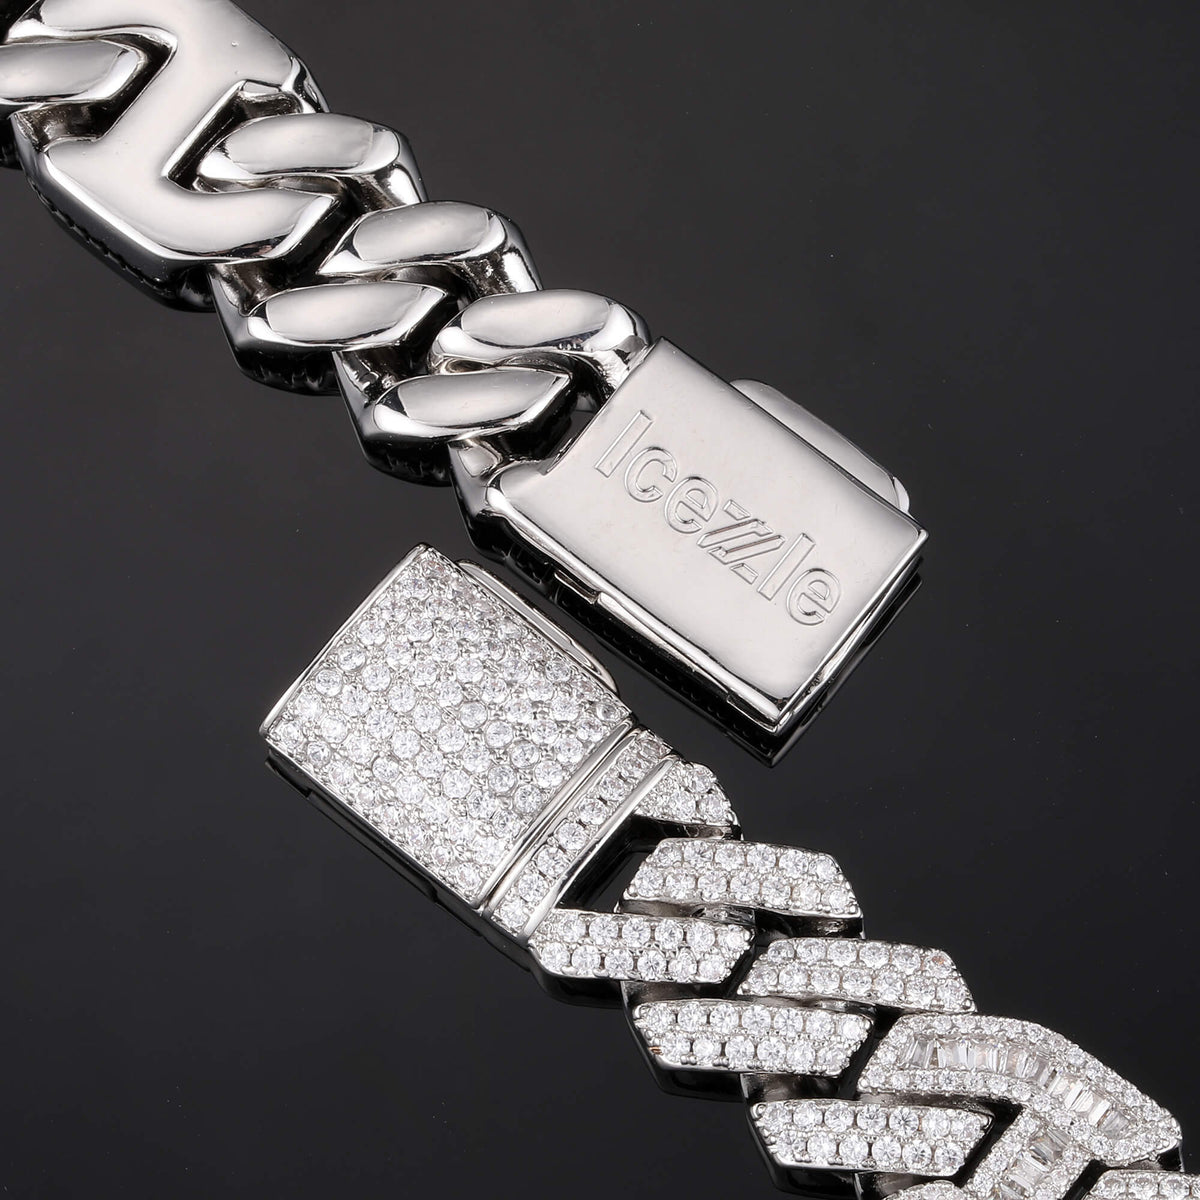 15mm Prong Baguette Gucci Curb Chain - Icezzle